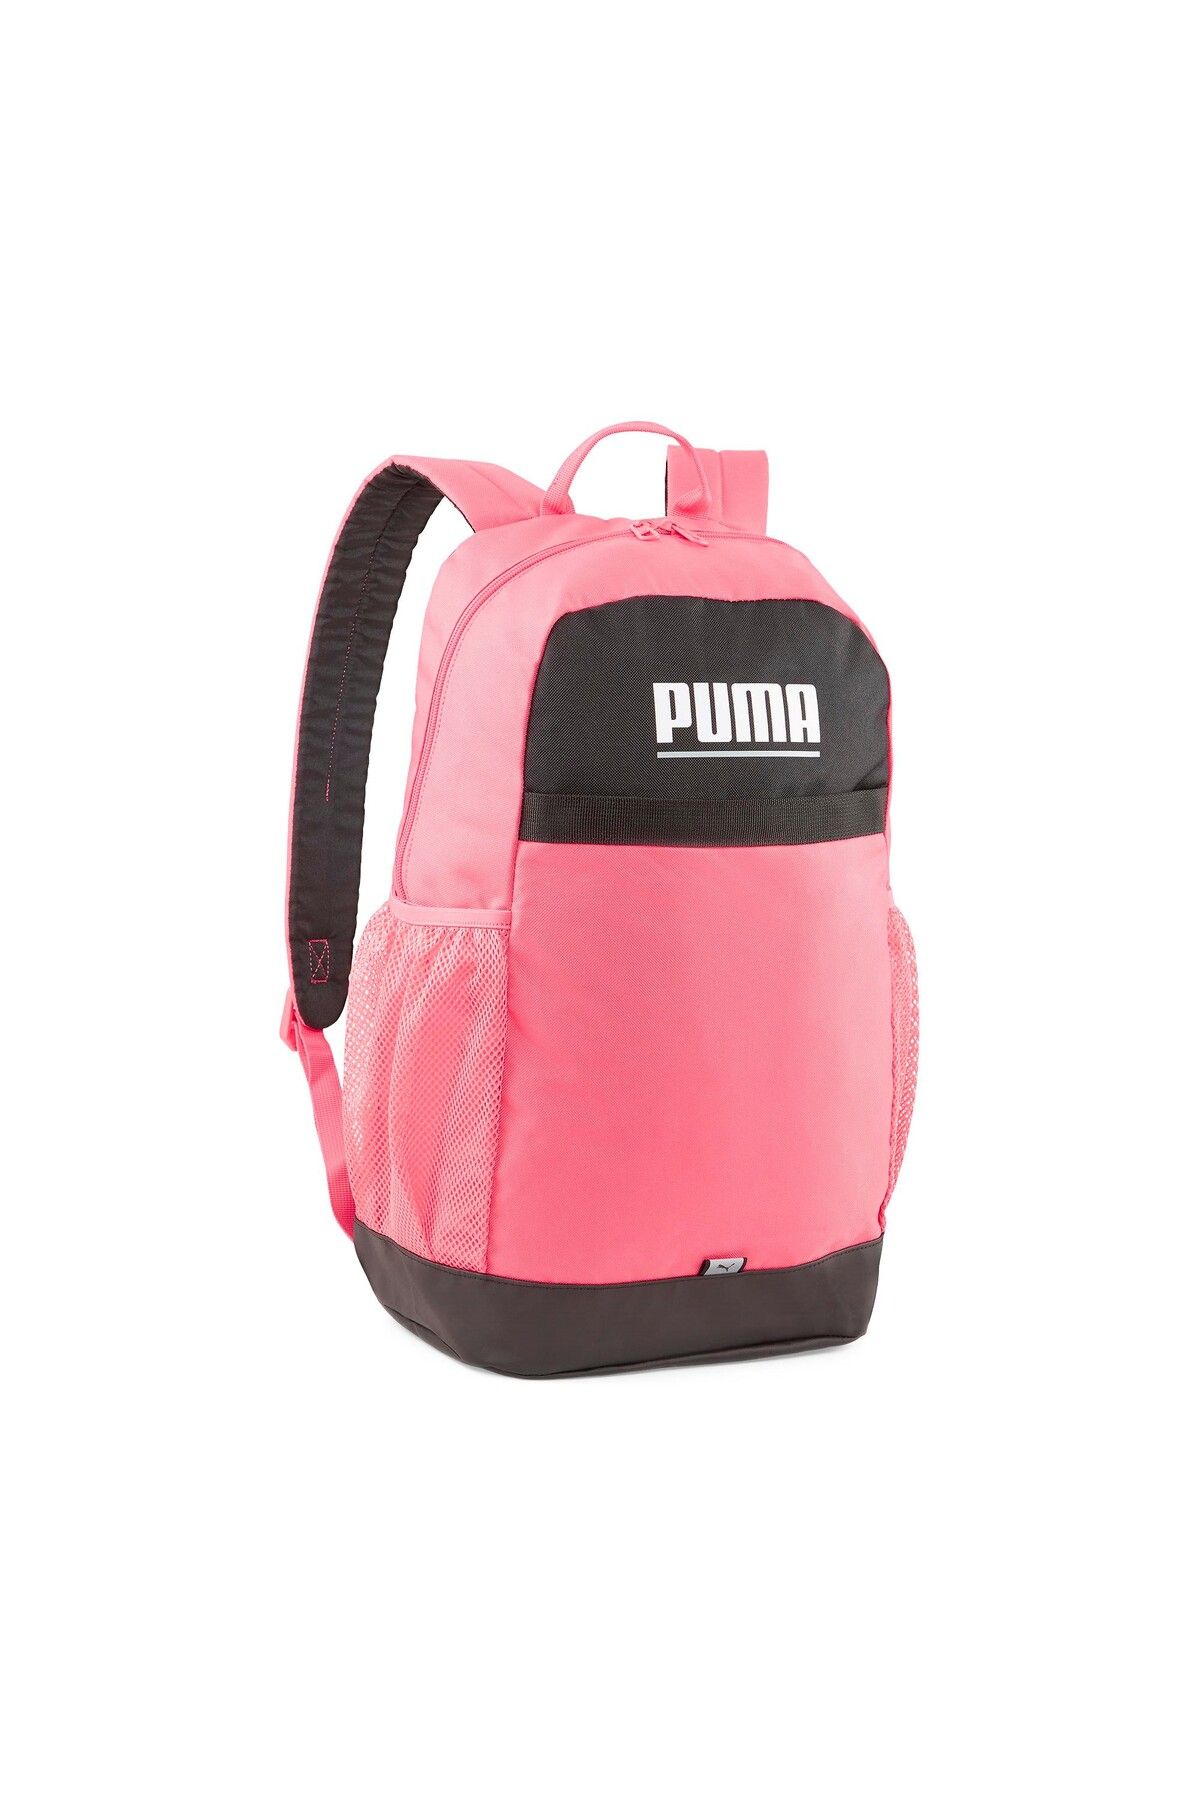 Puma PUMA Plus Backpack çanta